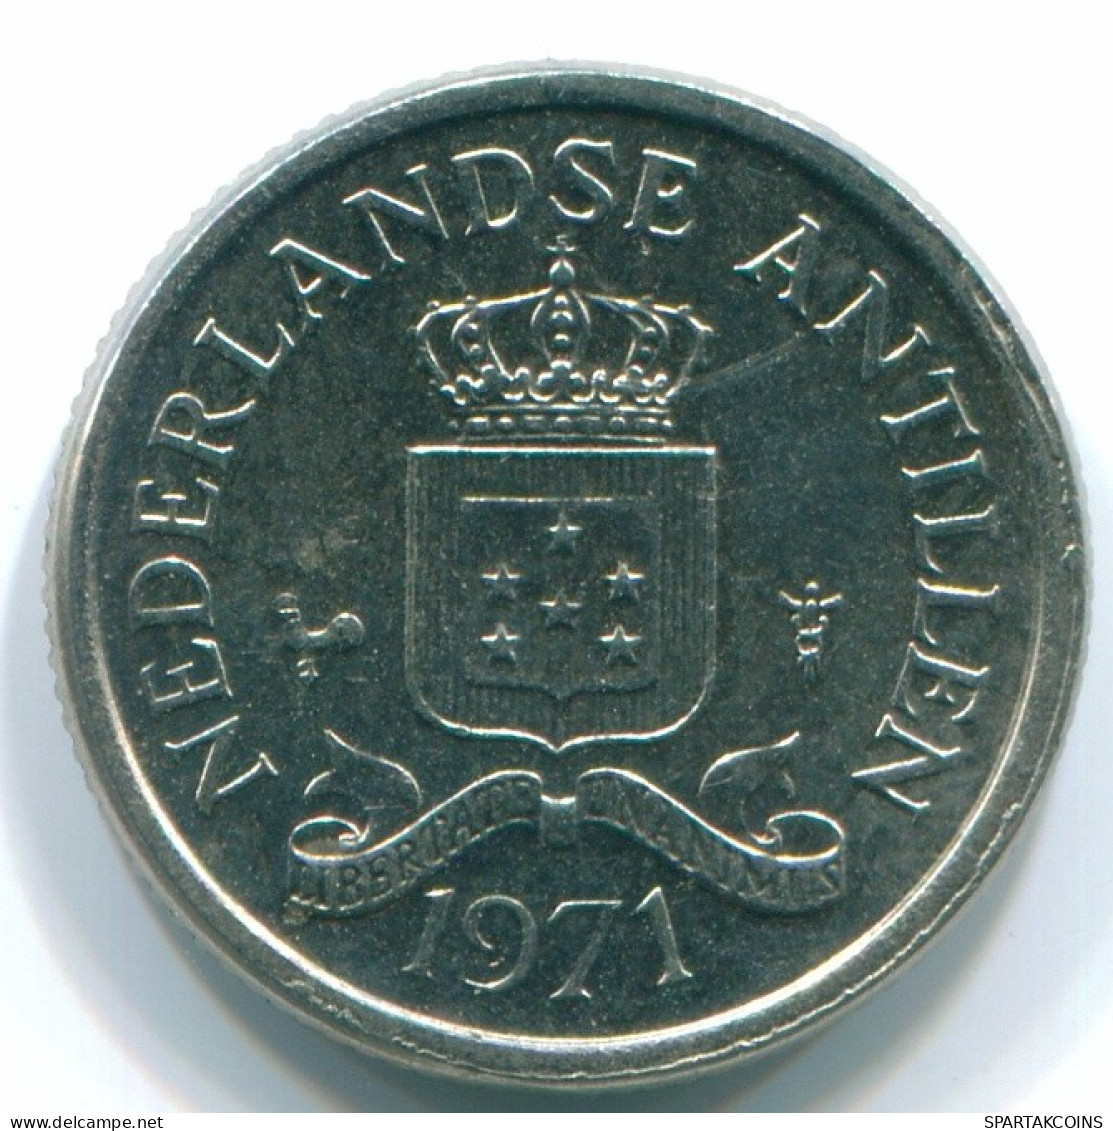 10 CENTS 1971 NETHERLANDS ANTILLES Nickel Colonial Coin #S13424.U.A - Antilles Néerlandaises